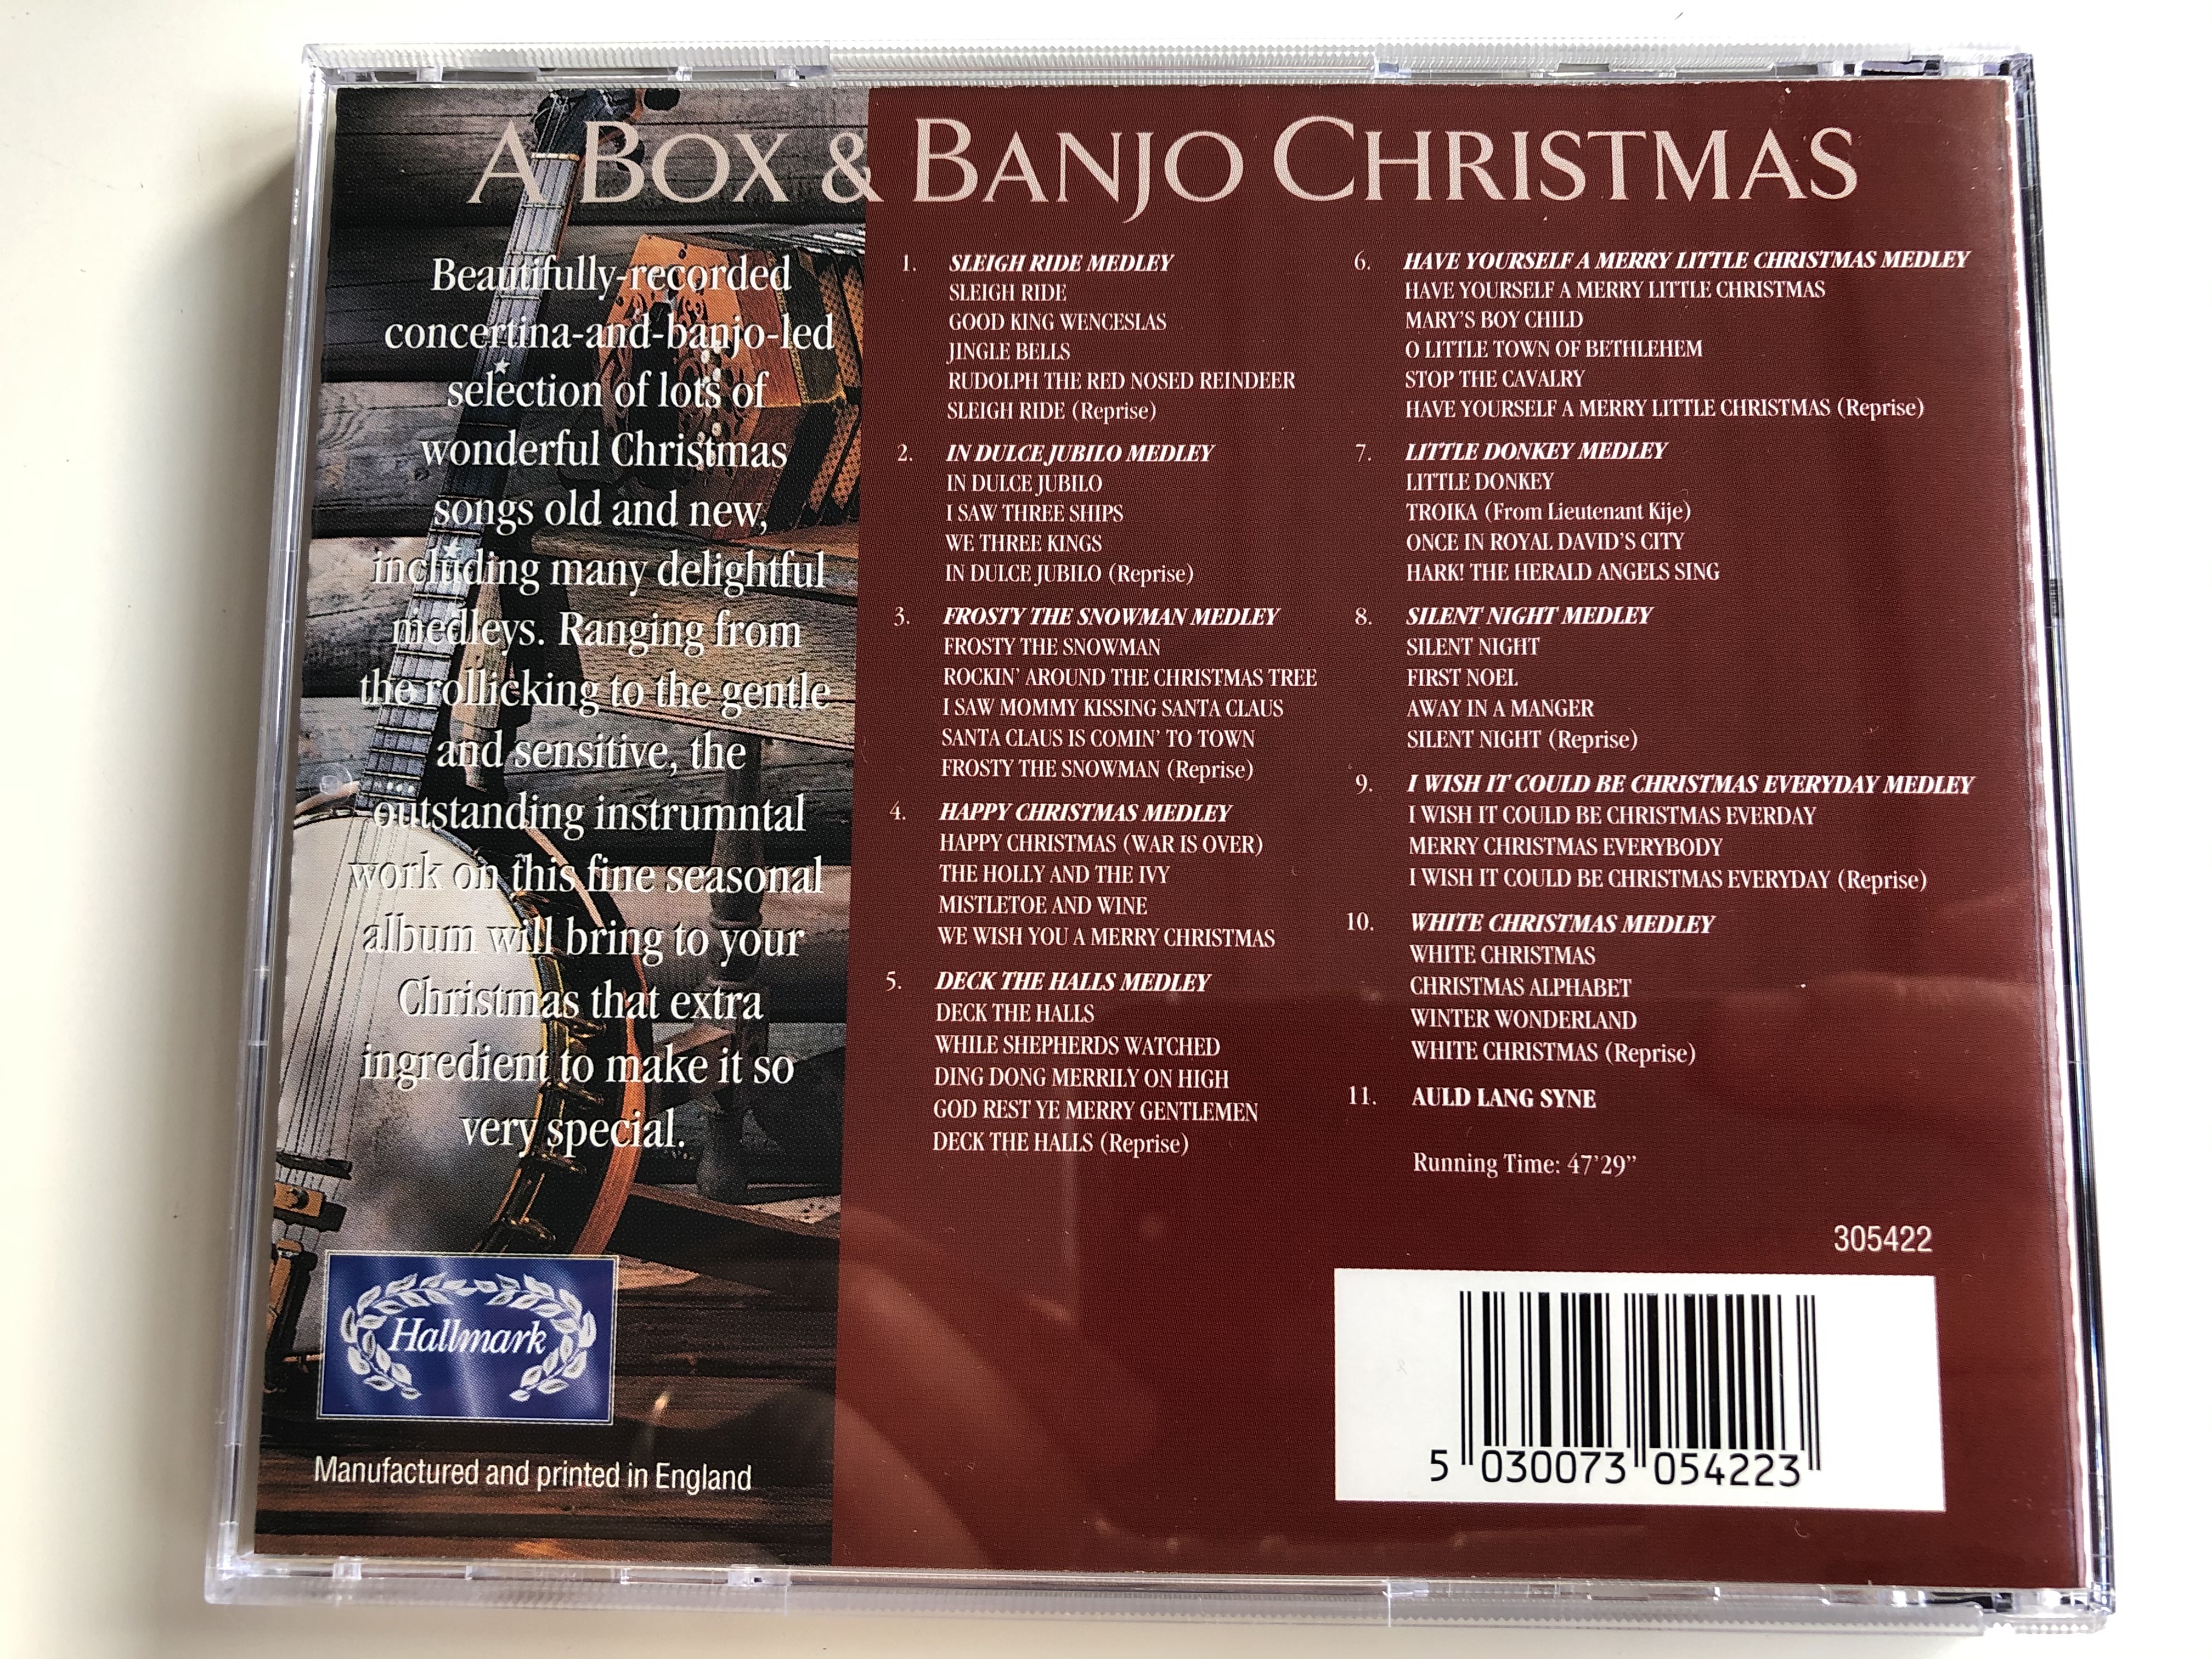 a-box-banjo-christmas-yuletide-favourites-played-on-the-concertina-banjo-hallmark-audio-cd-1996-305422-4-.jpg